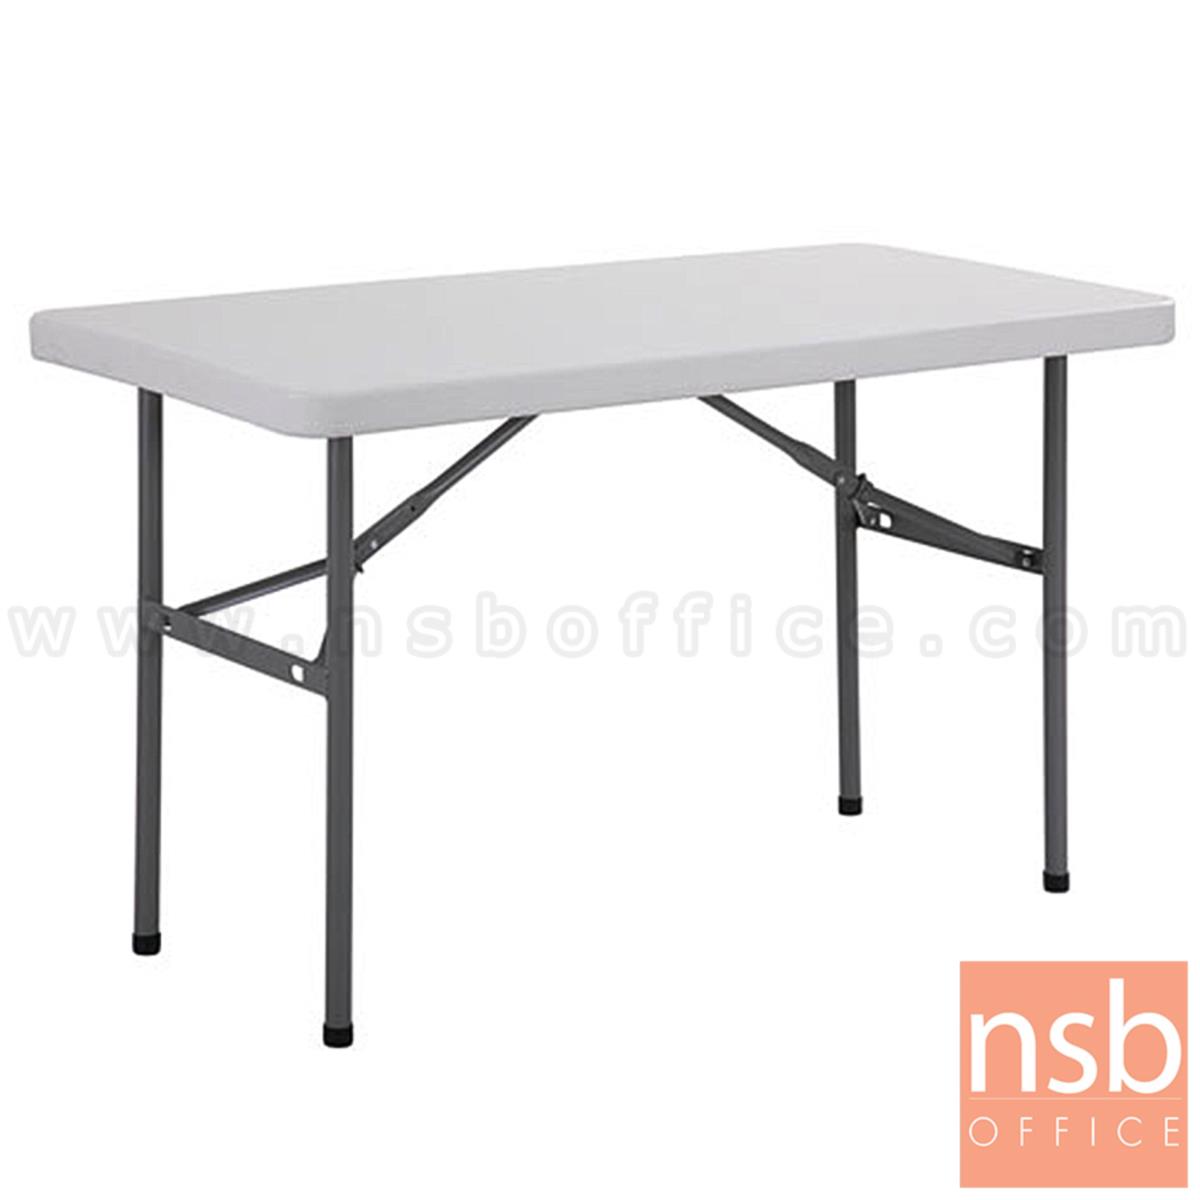 A19A021:โต๊ะพับหน้าพลาสติก รุ่น Colossal (โคลอซซอล) ขนาด 122.2W, 150W, 180W cm.  ขาเหล็กสีดำเกล็ดเงิน